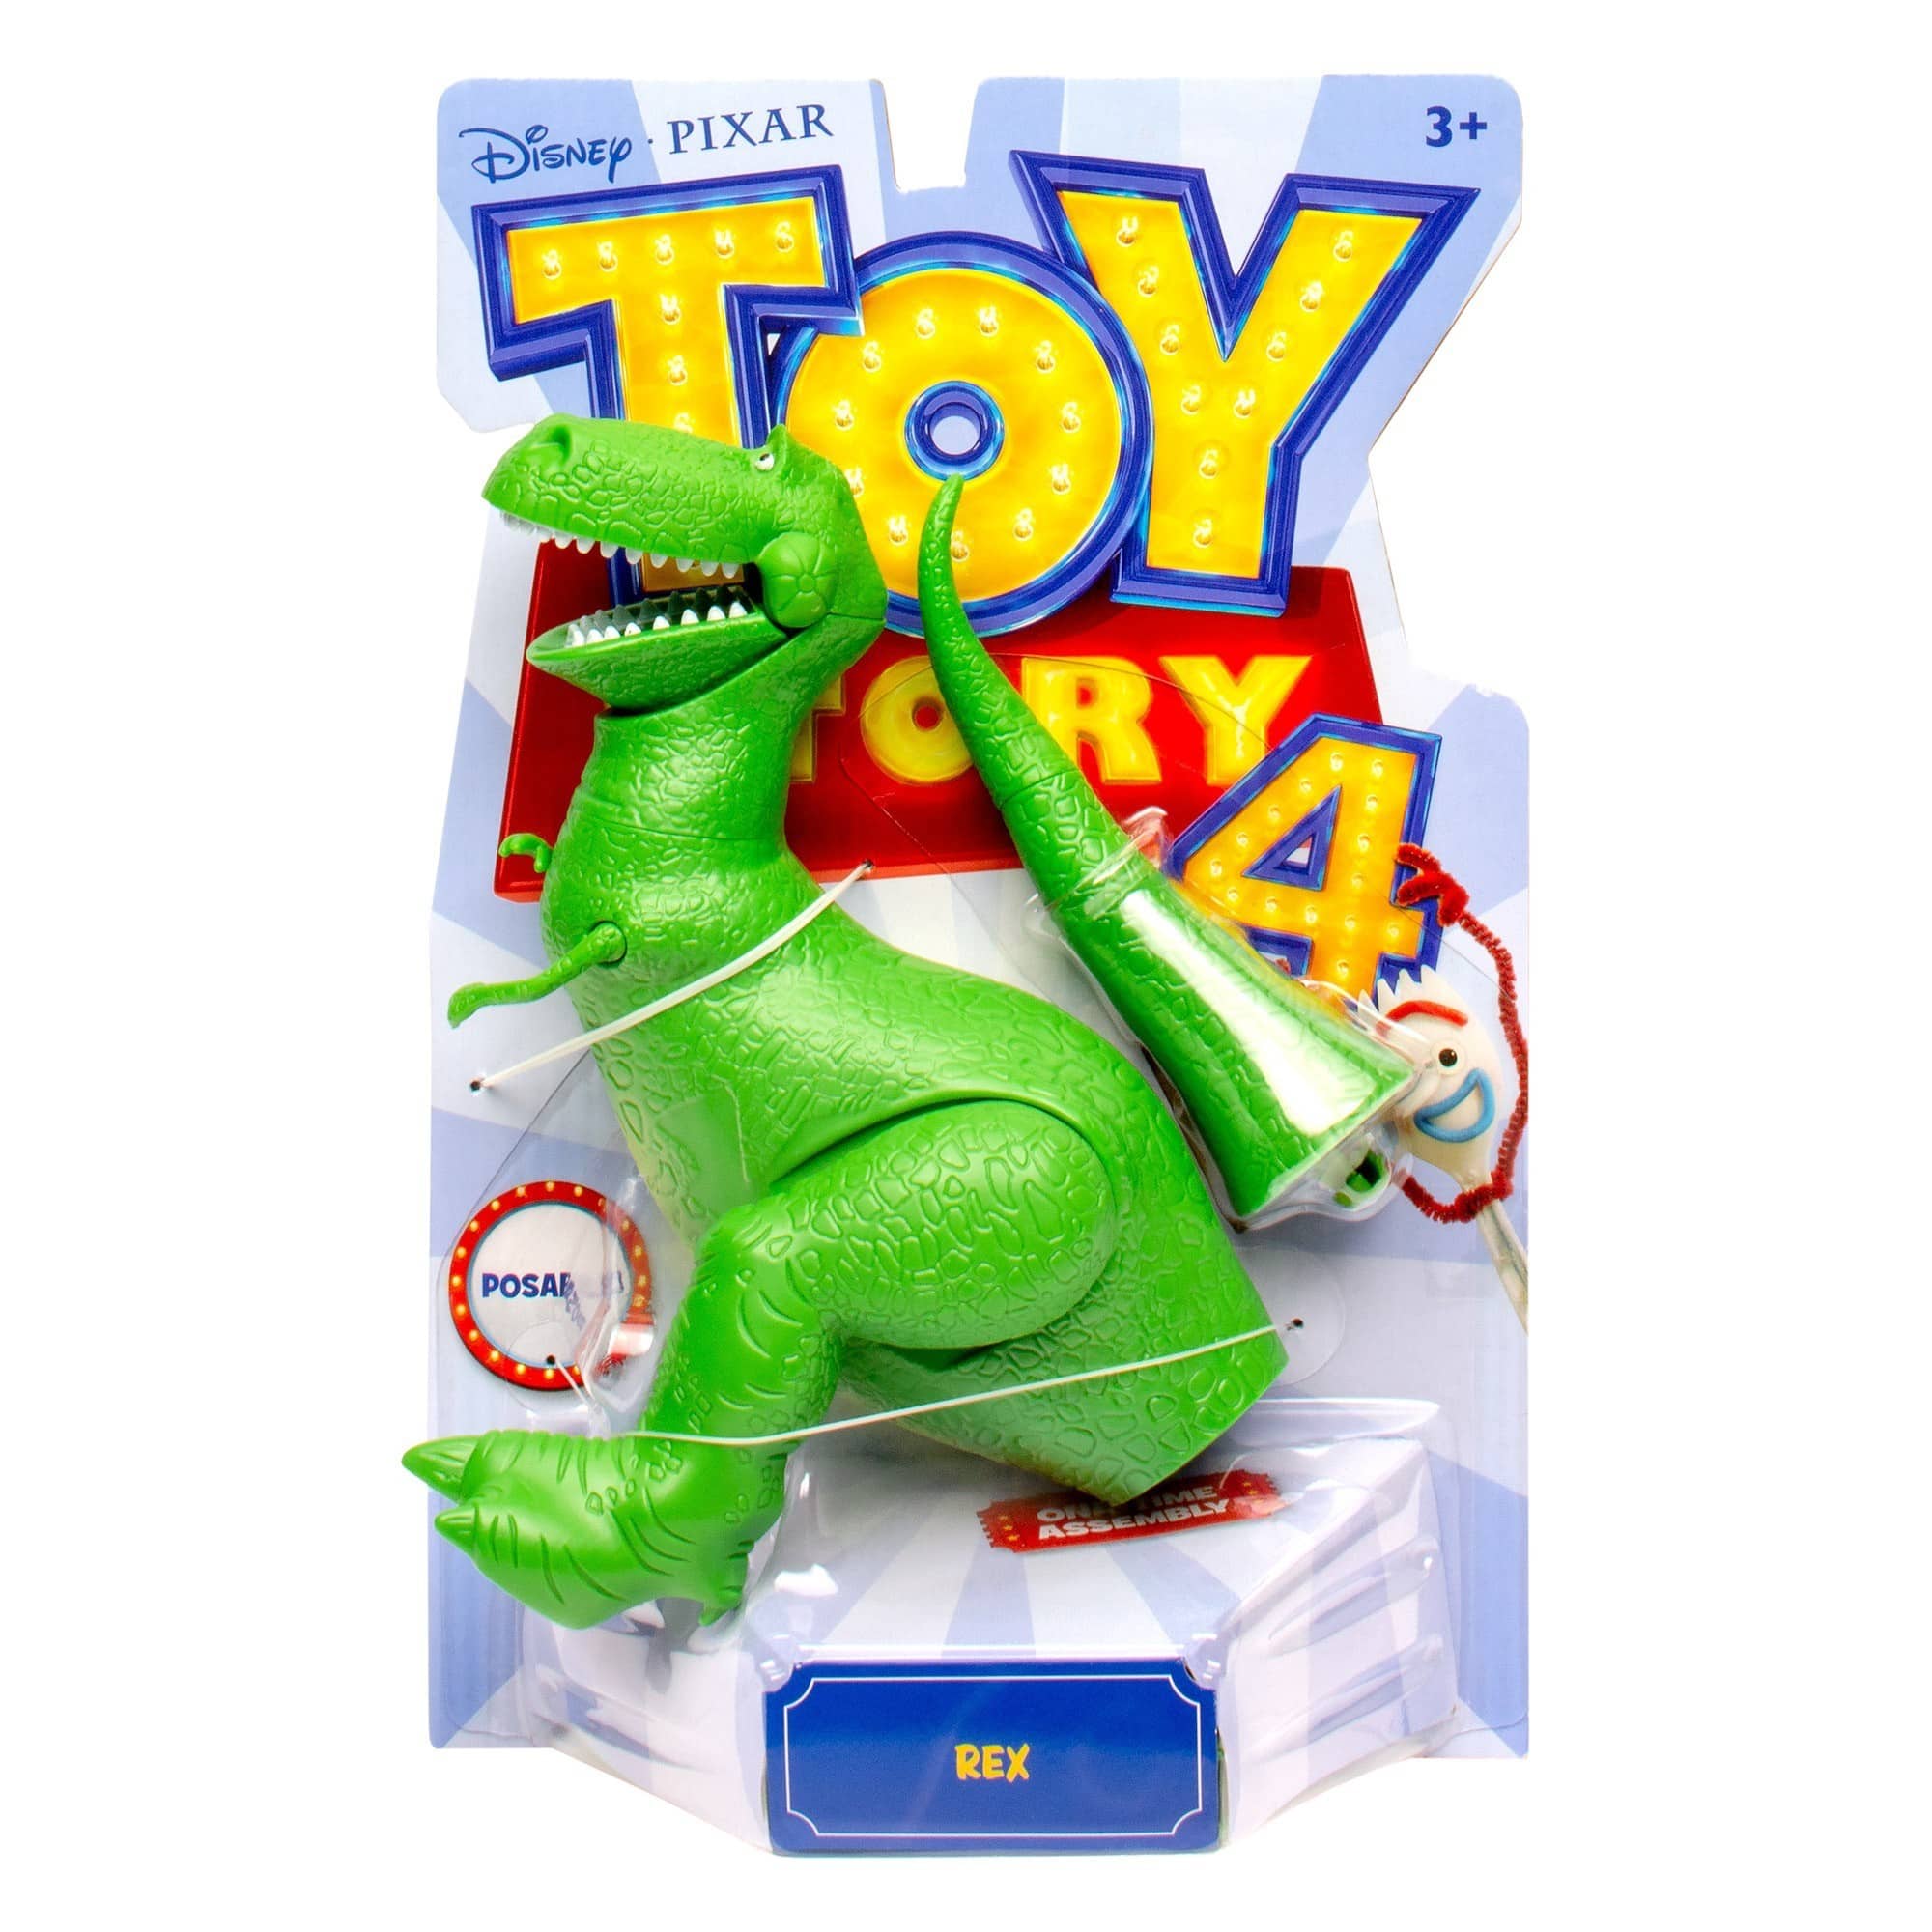 Toy Story 4 - 7" Figure Assortment - Rex